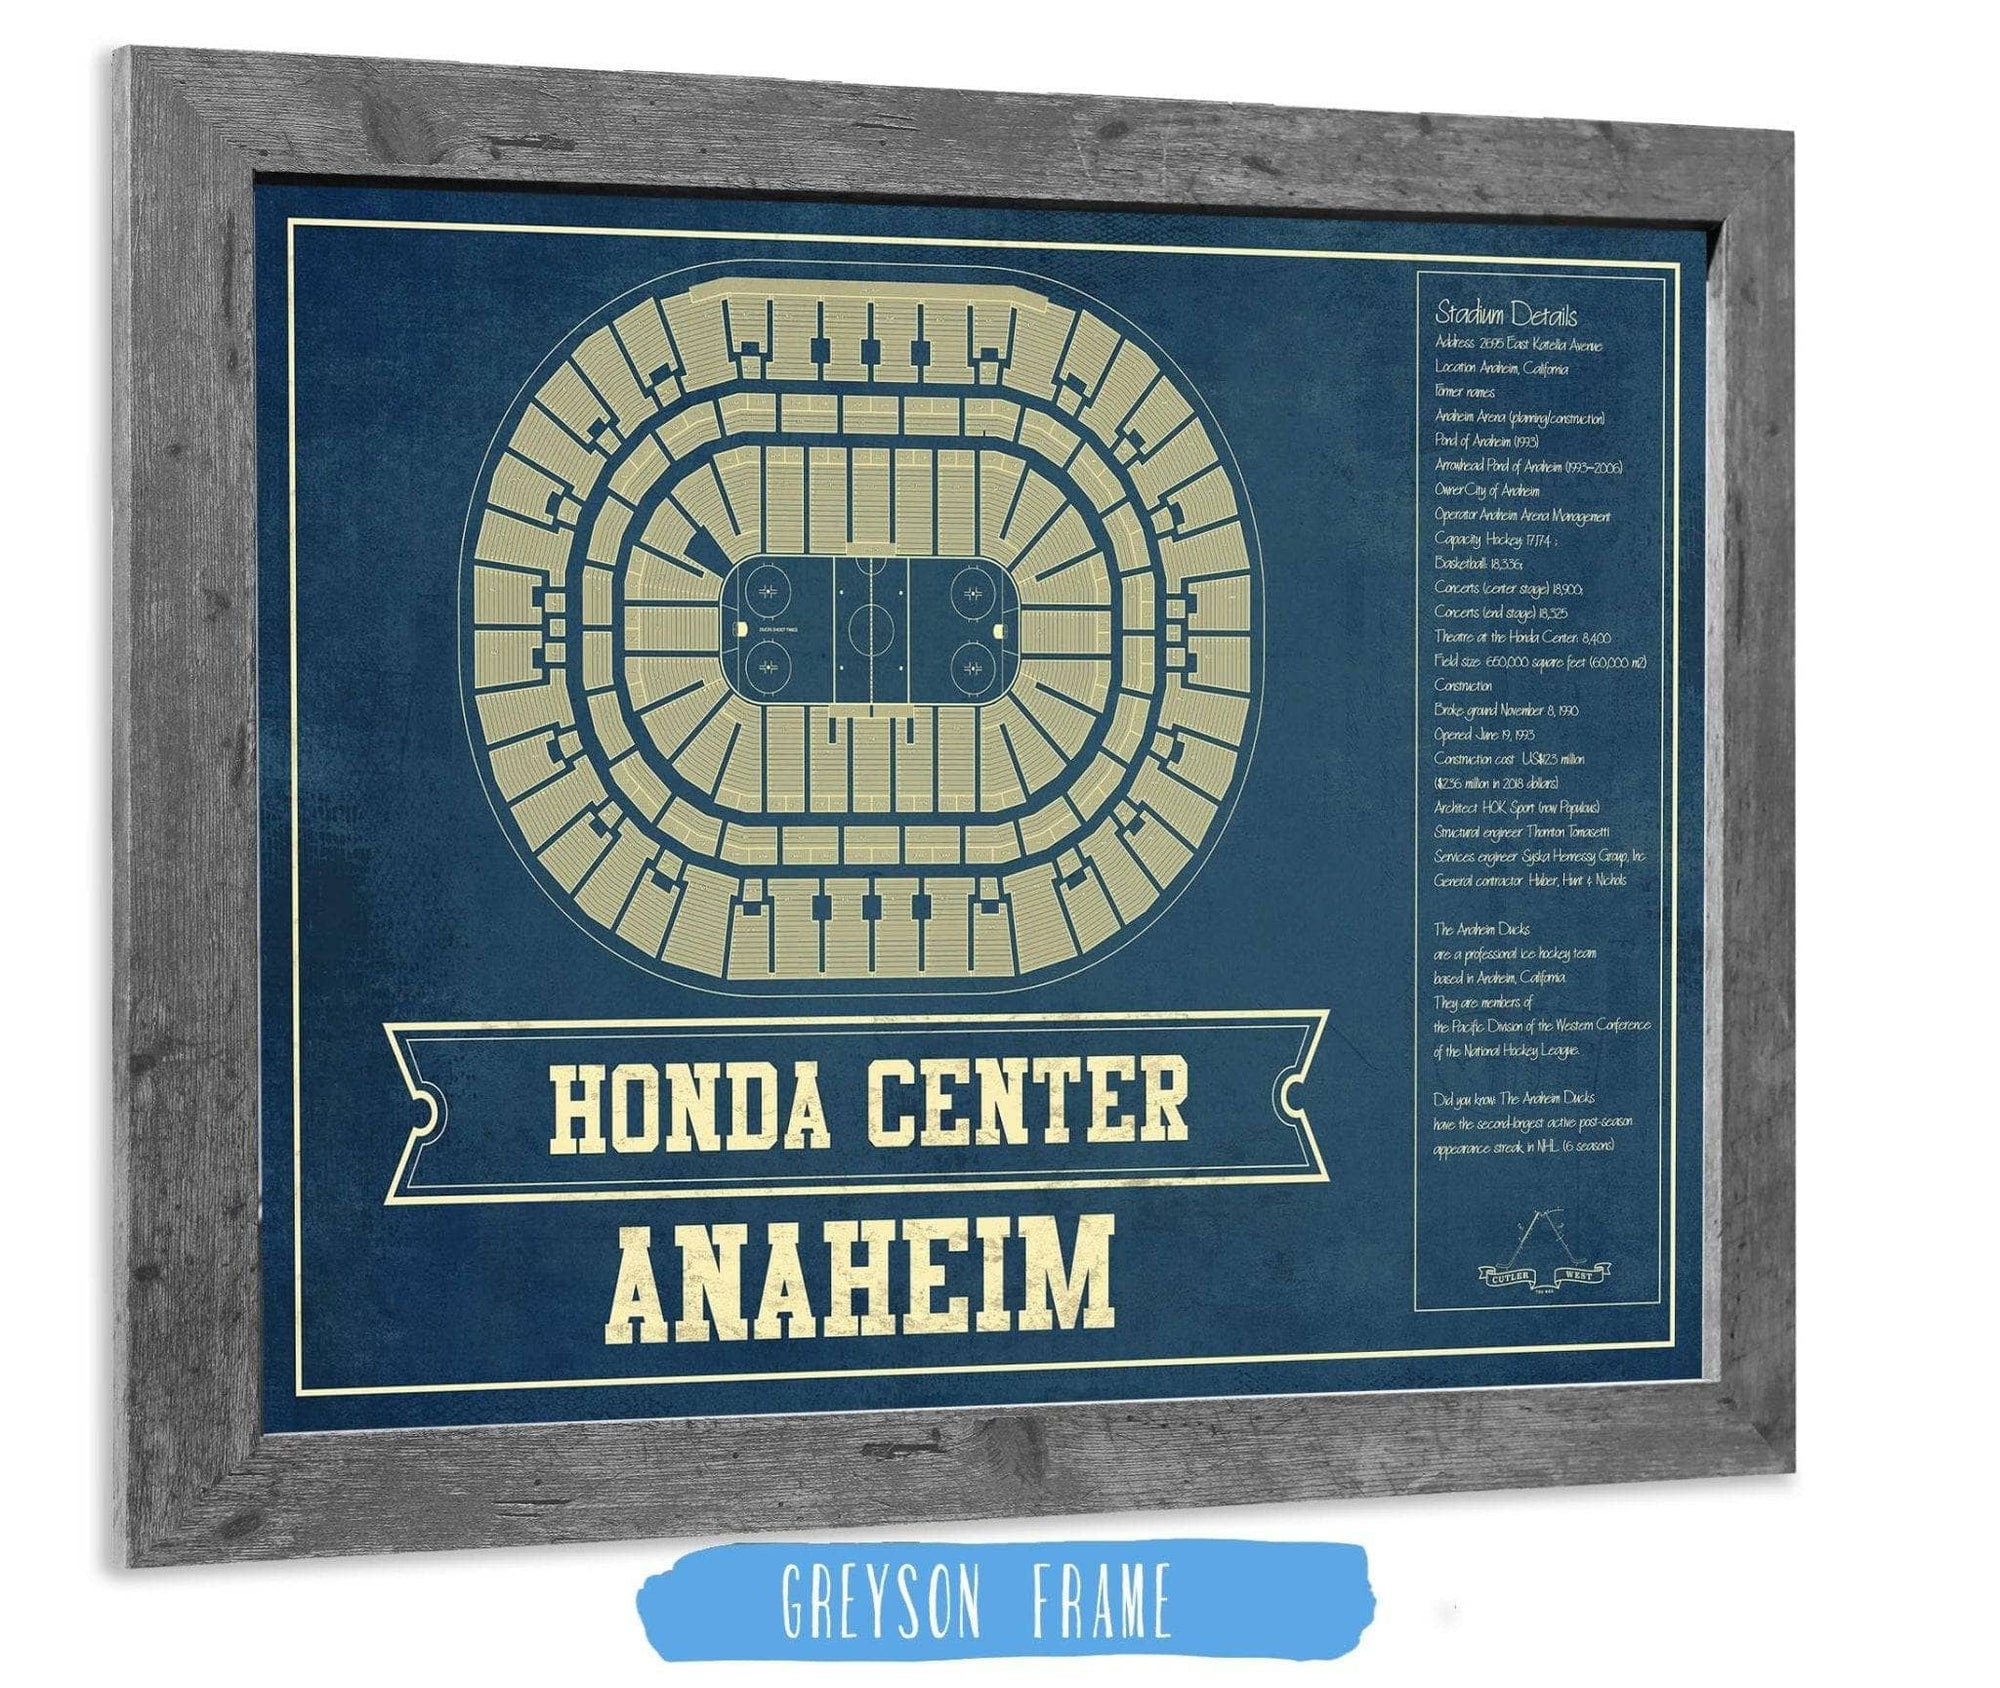 Cutler West 14" x 11" / Greyson Frame Anaheim Ducks - Honda Center Vintage Hockey Blueprint NHL Print 933350178_77890